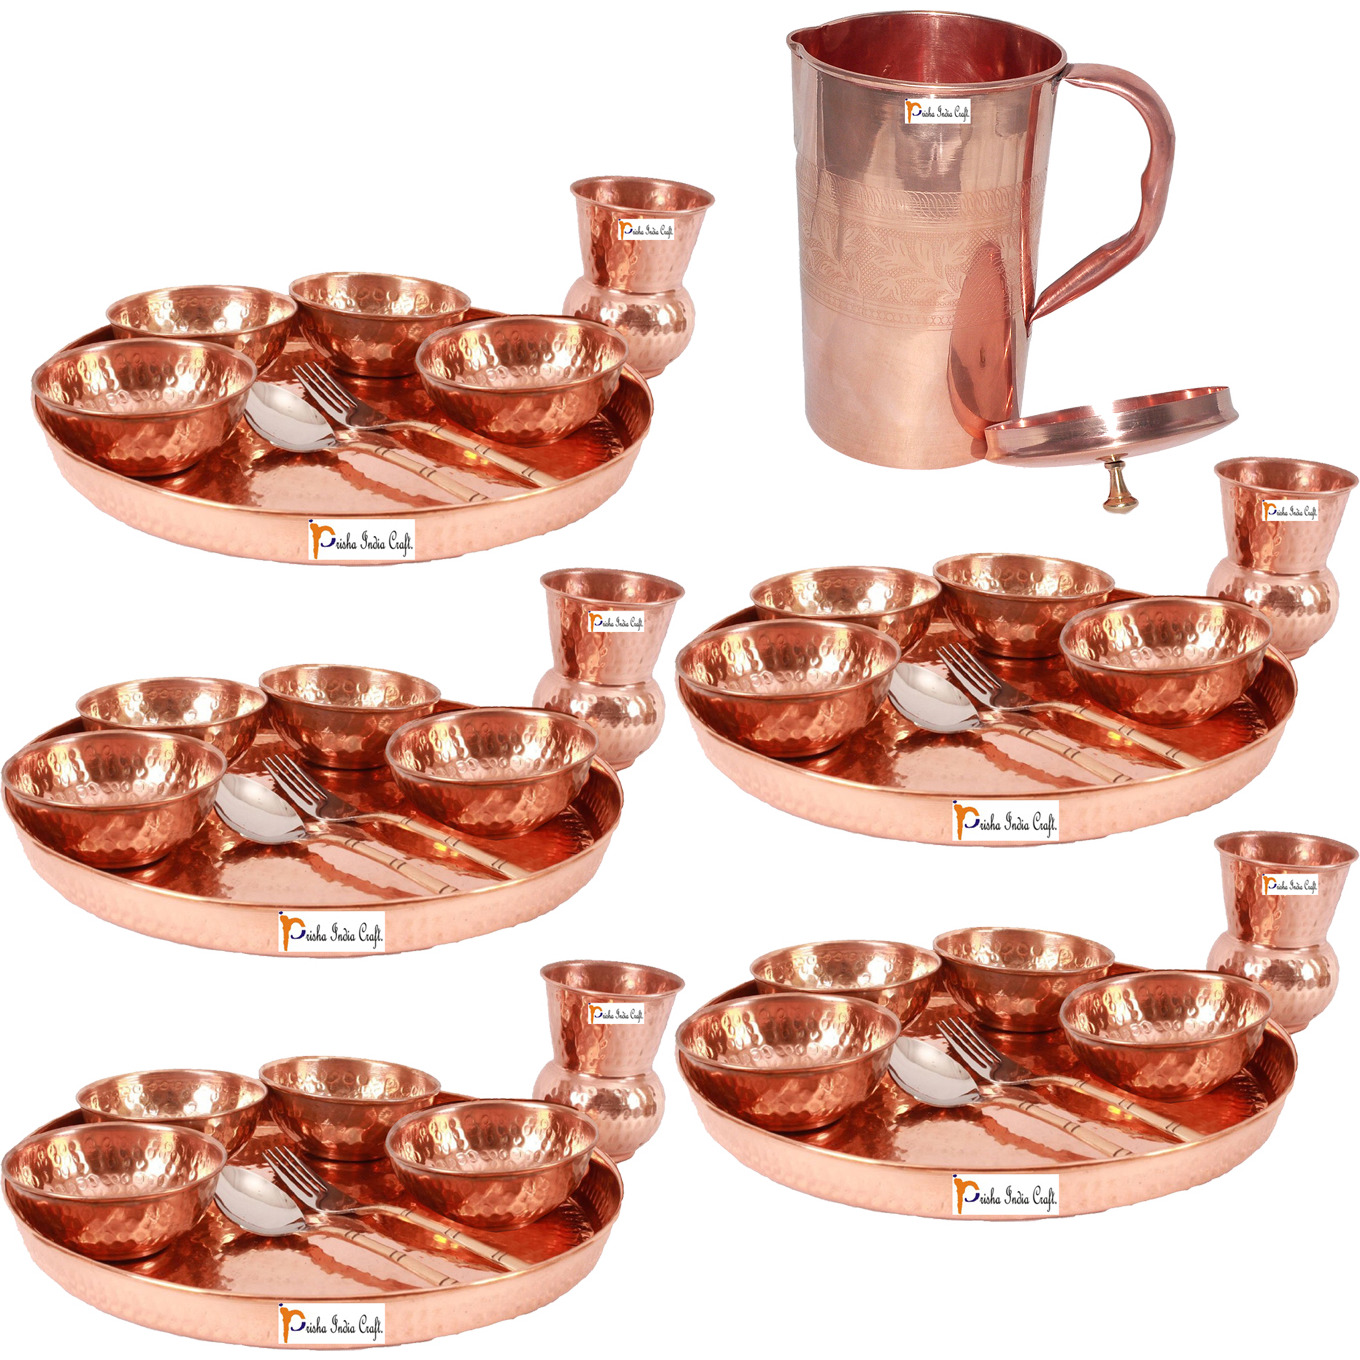 Prisha India Craft Pure Copper Thali Set of Plate, Bowl, Spoon, Fork, Glass, 12-Inch